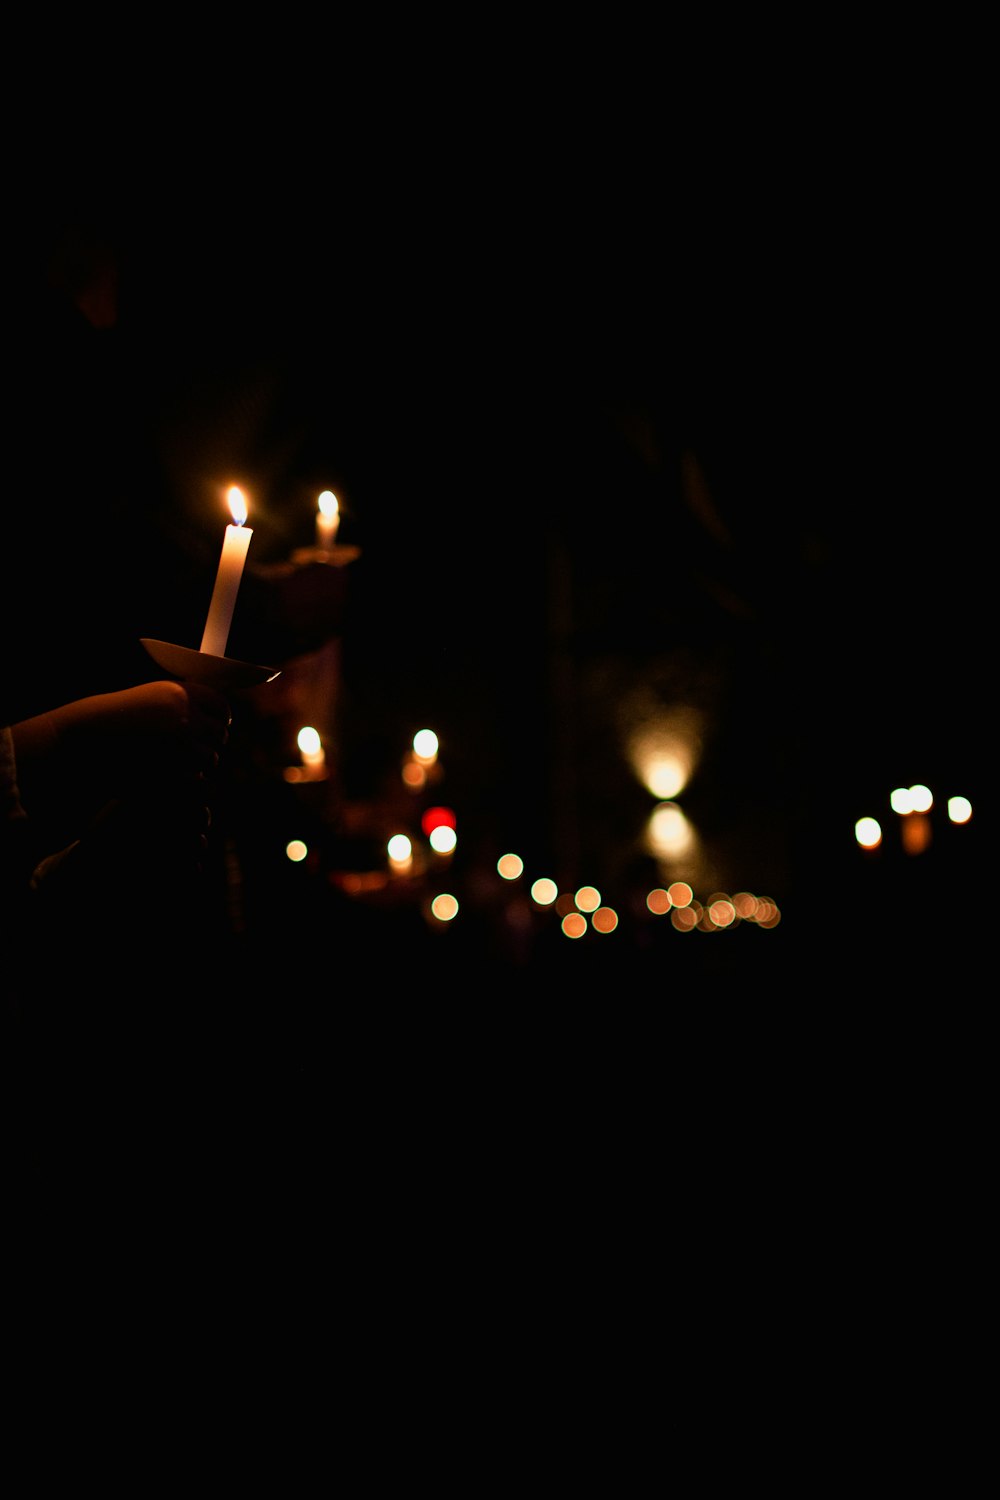 Persona sosteniendo una vela encendida durante la noche